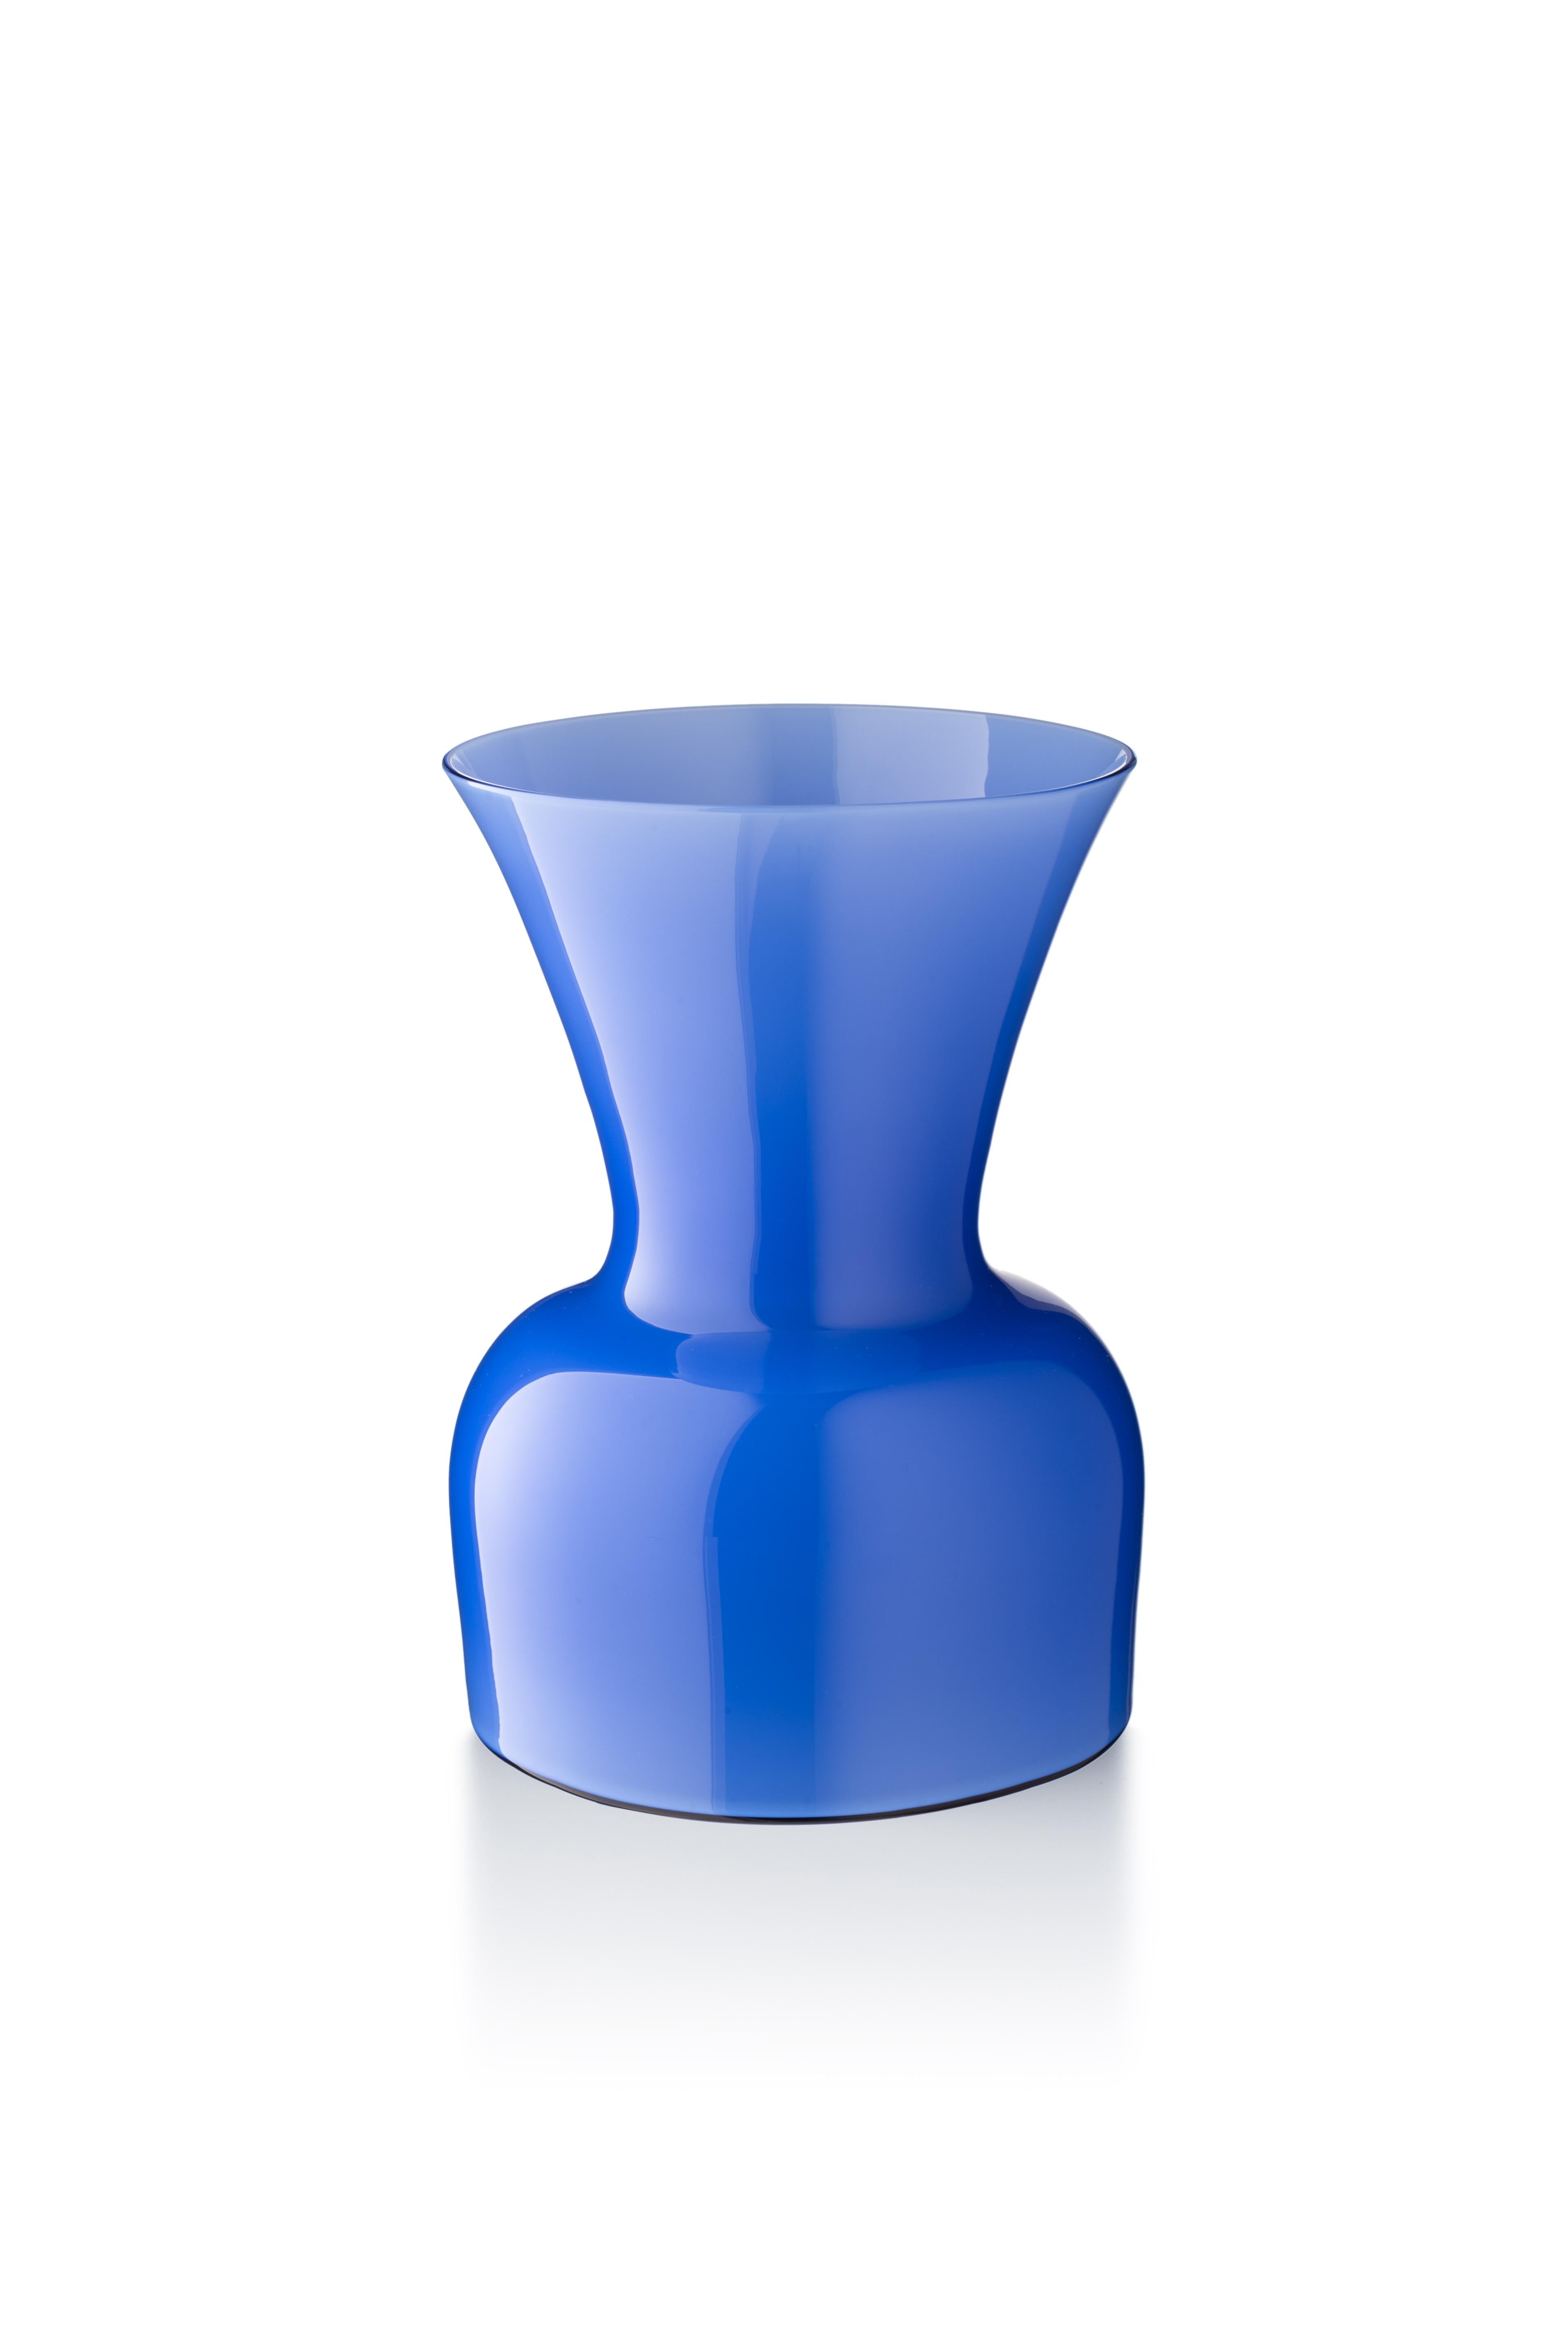 Blue (10049) Medium Profili Daisy Murano Glass Vase by Anna Gili